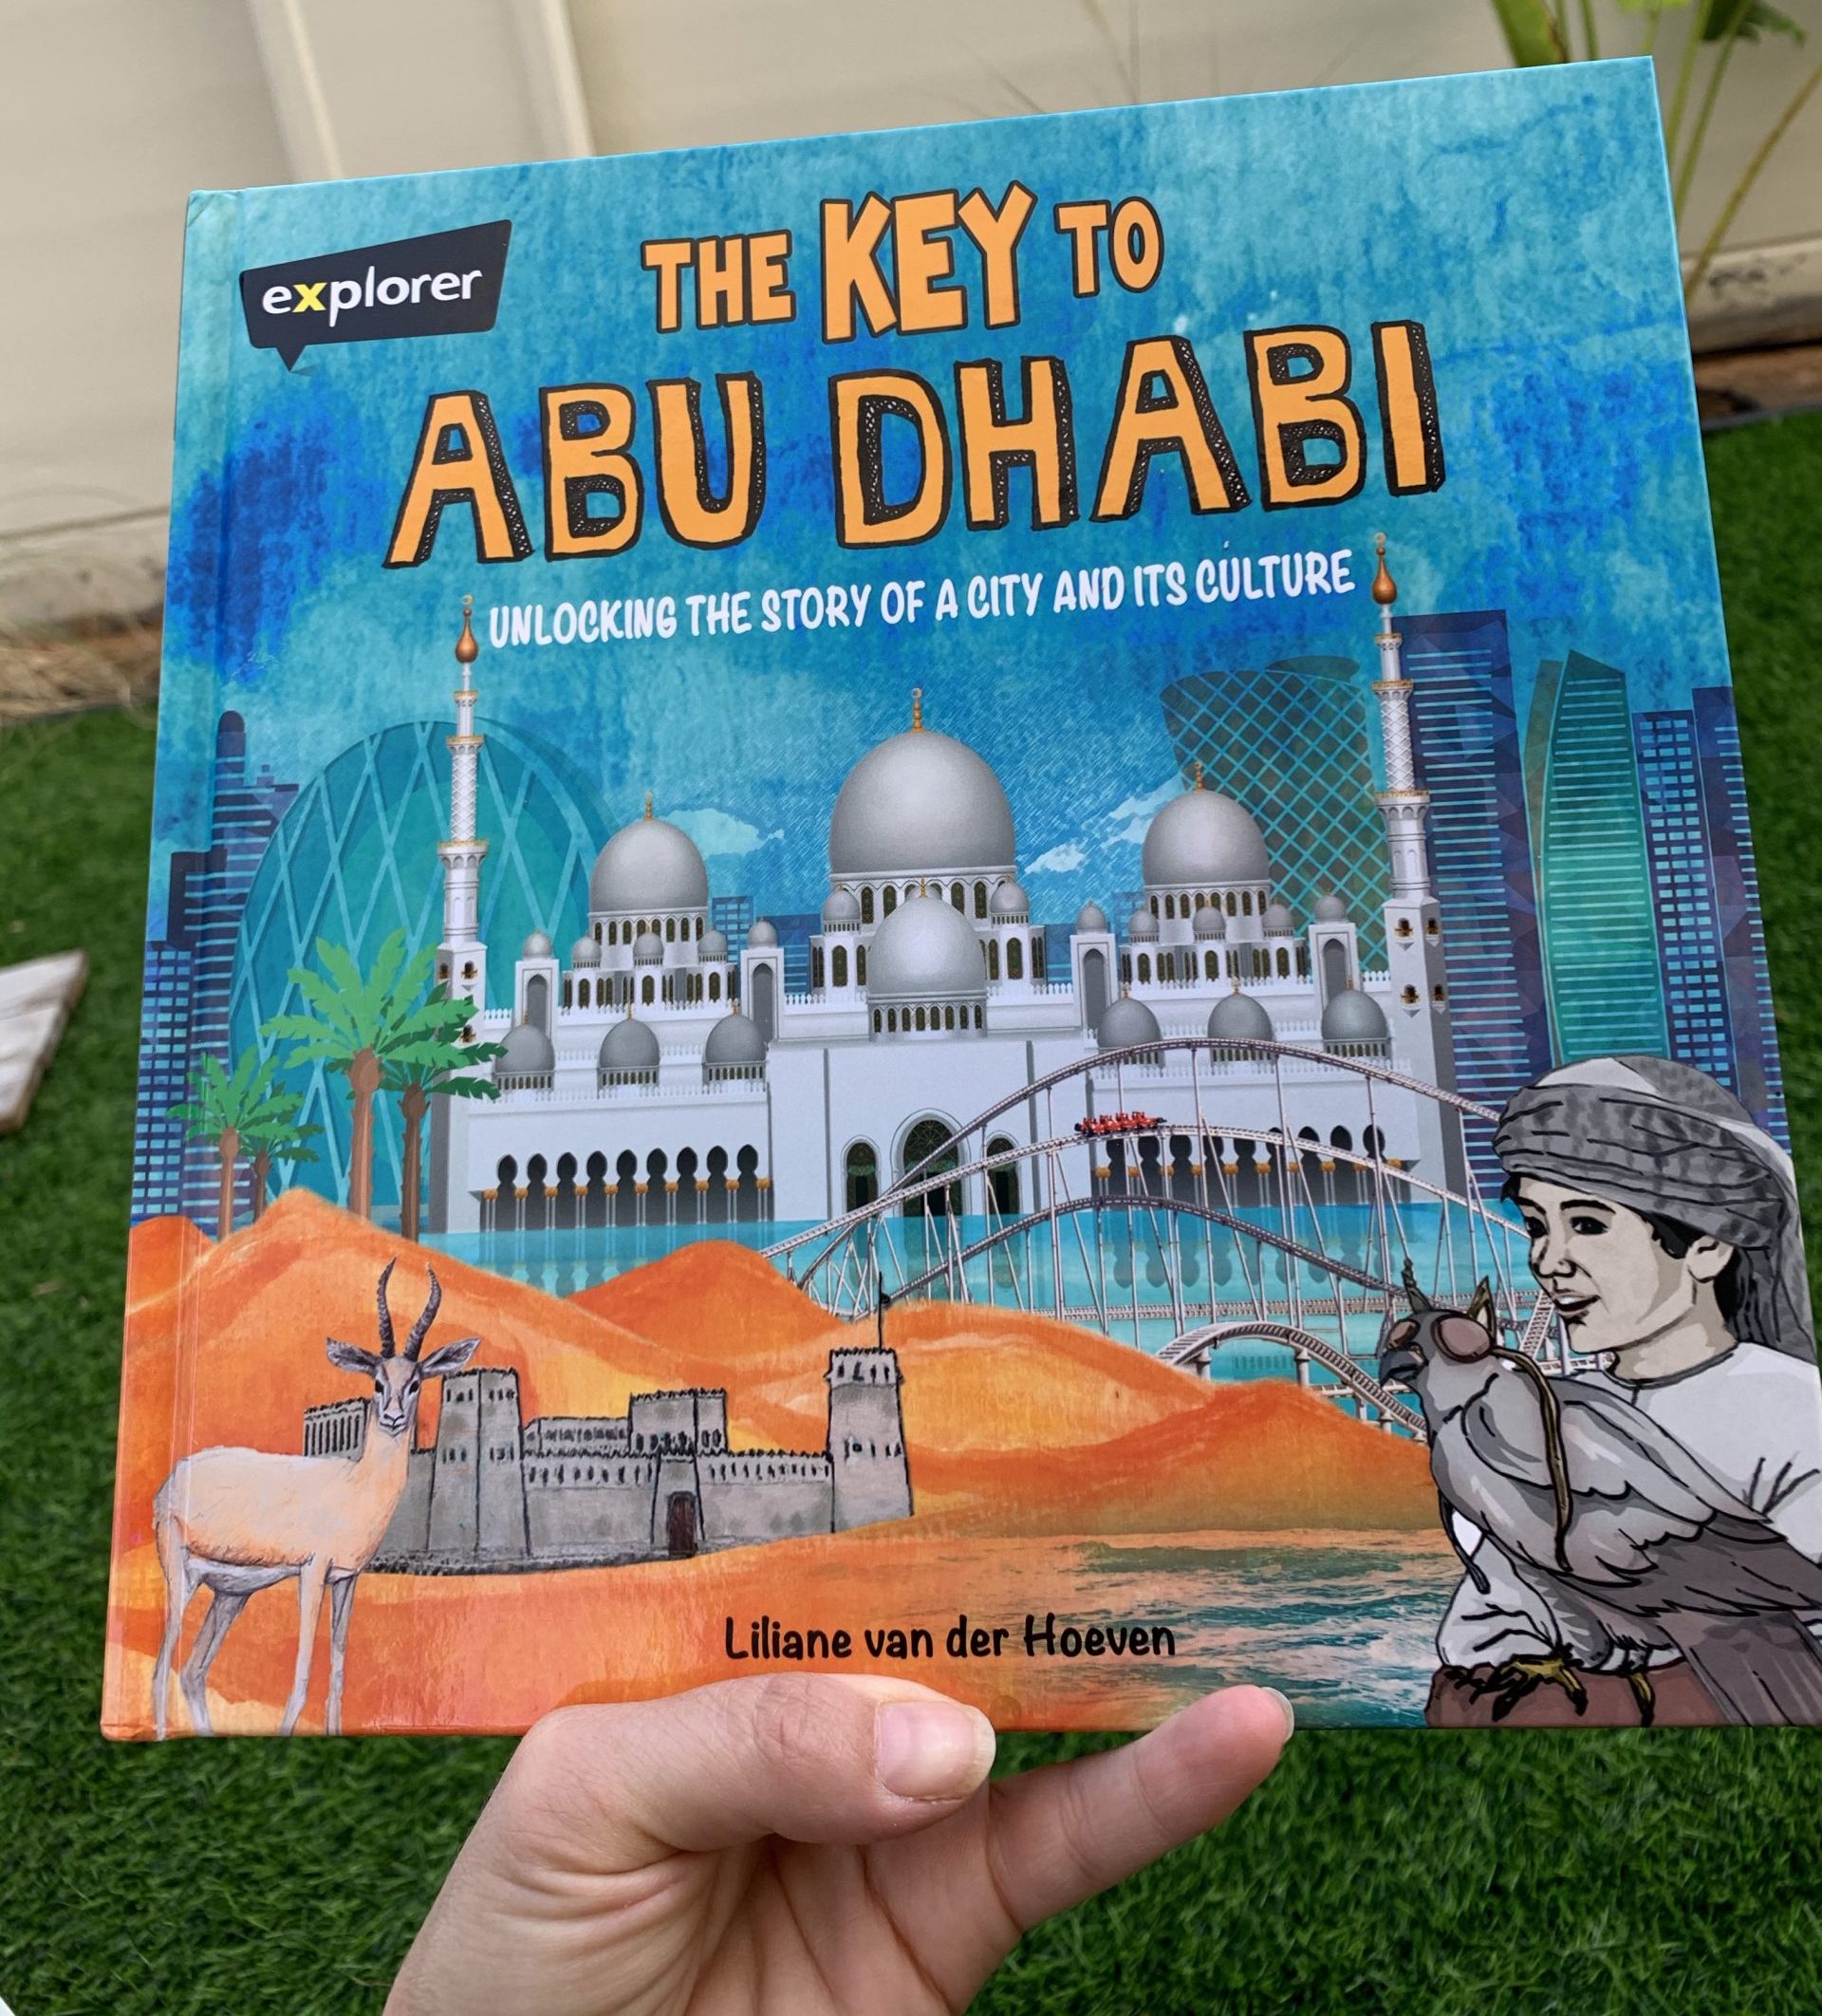 Boek over Abu Dhabi